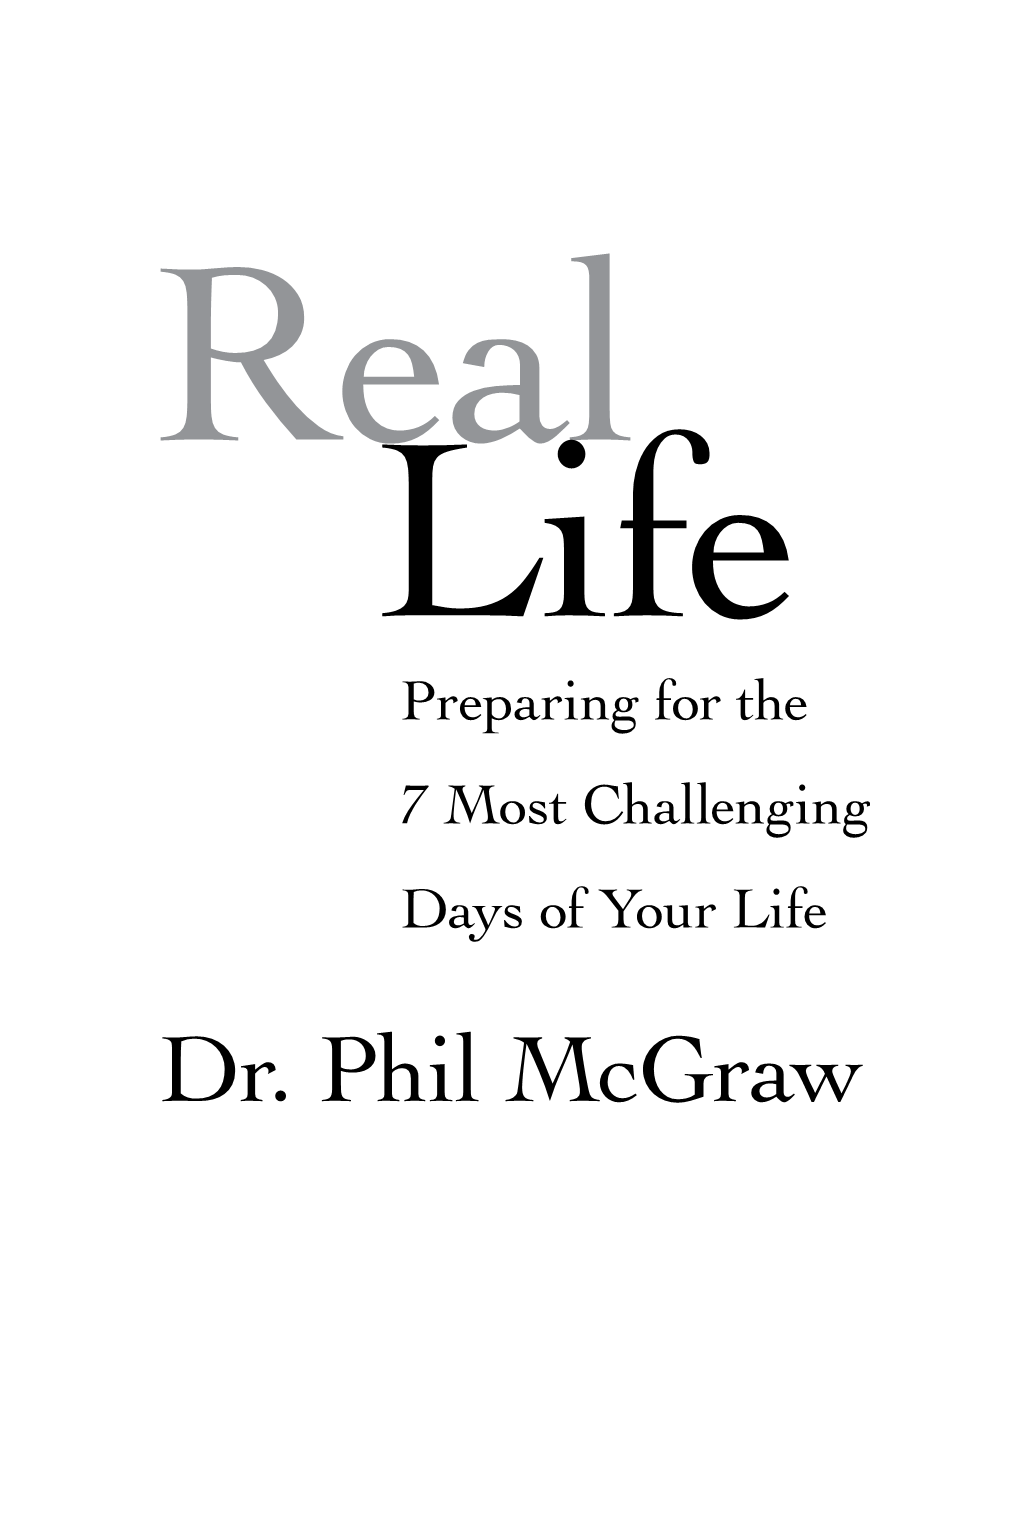 Dr. Phil Mcgraw STRESS EVENT SURVEY